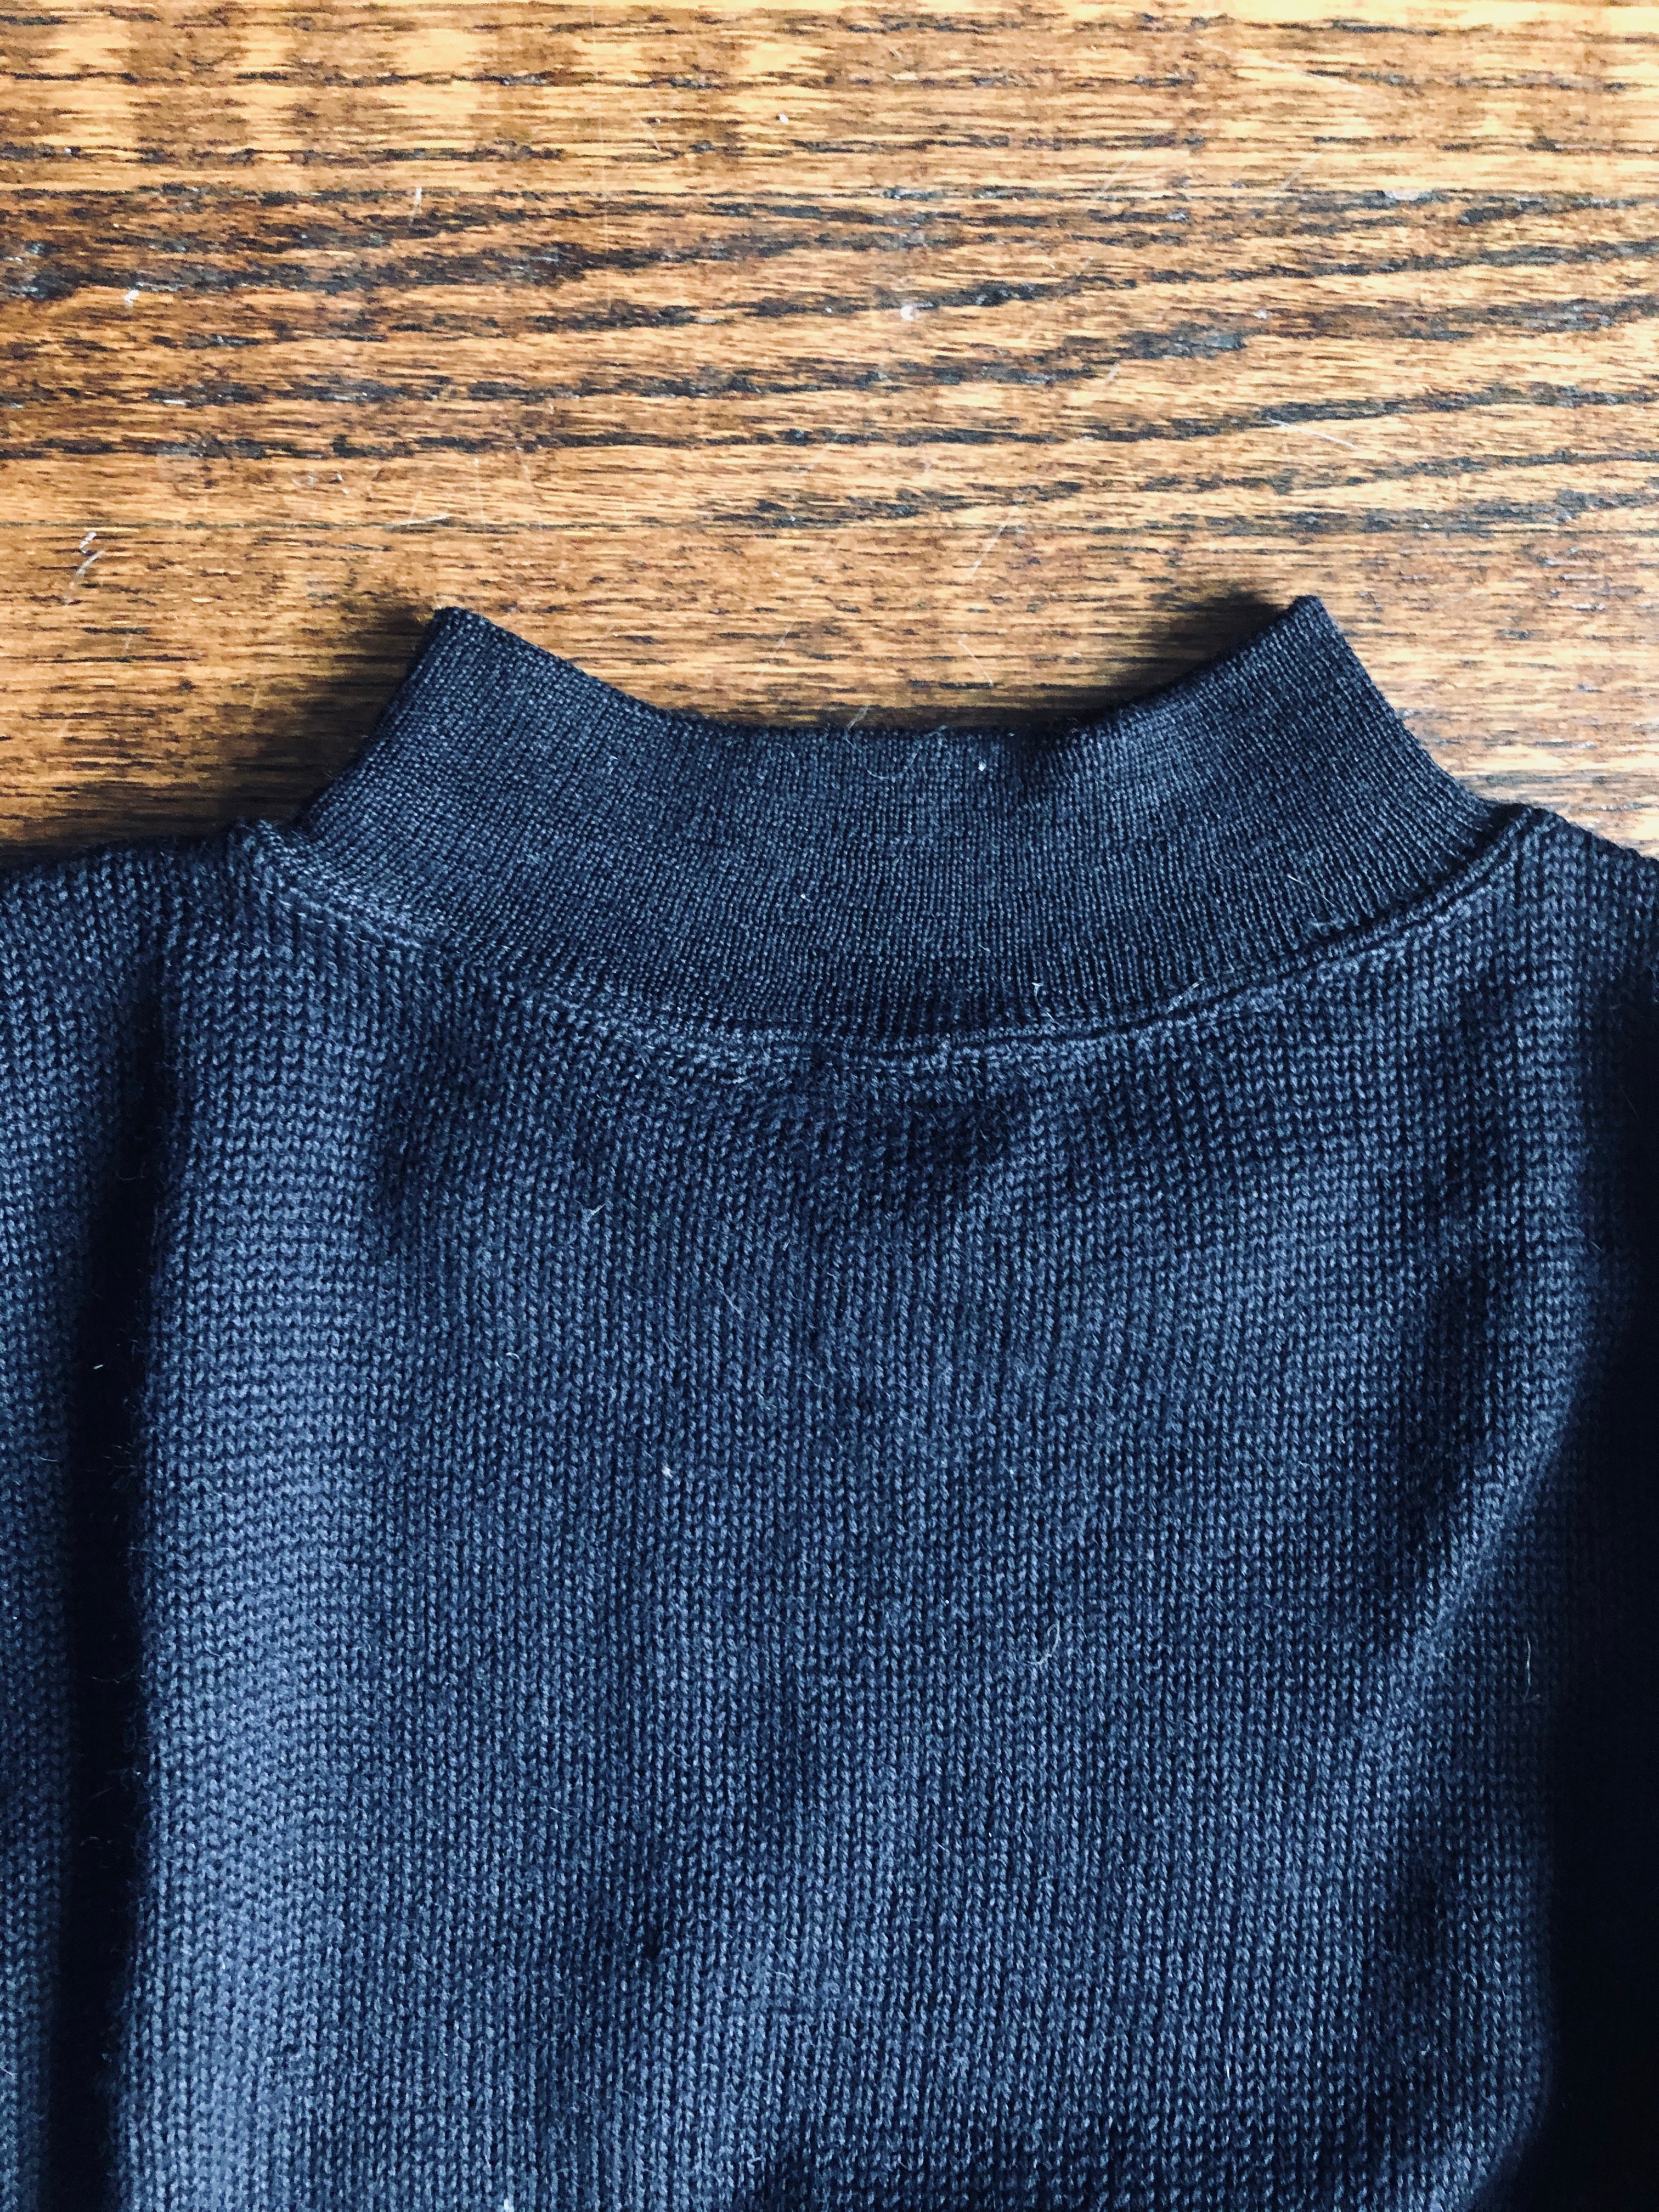 Sara Quarter-zip Pullover PDF Sewing Pattern and Tutorial, Sizes 0-24 